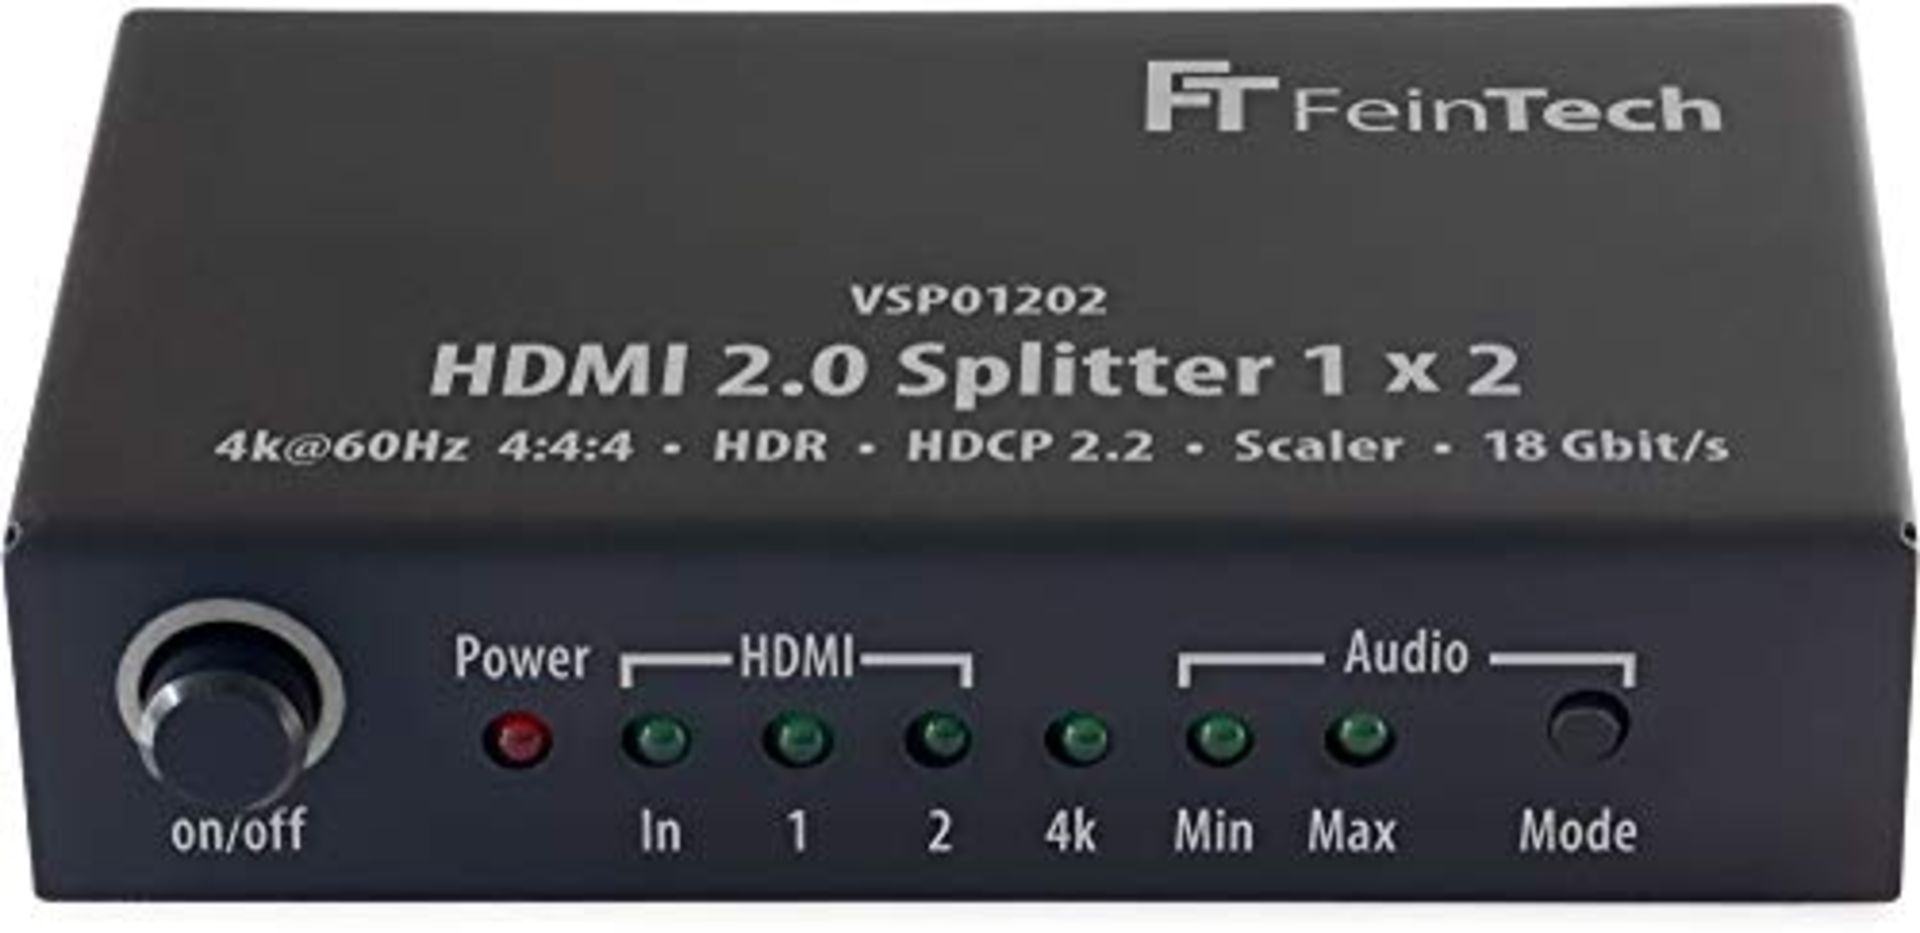 FeinTech VSP01202 HDMI 2.0 Splitter 1x2 with 4K HDR Down-Scaler Audio EDID Black